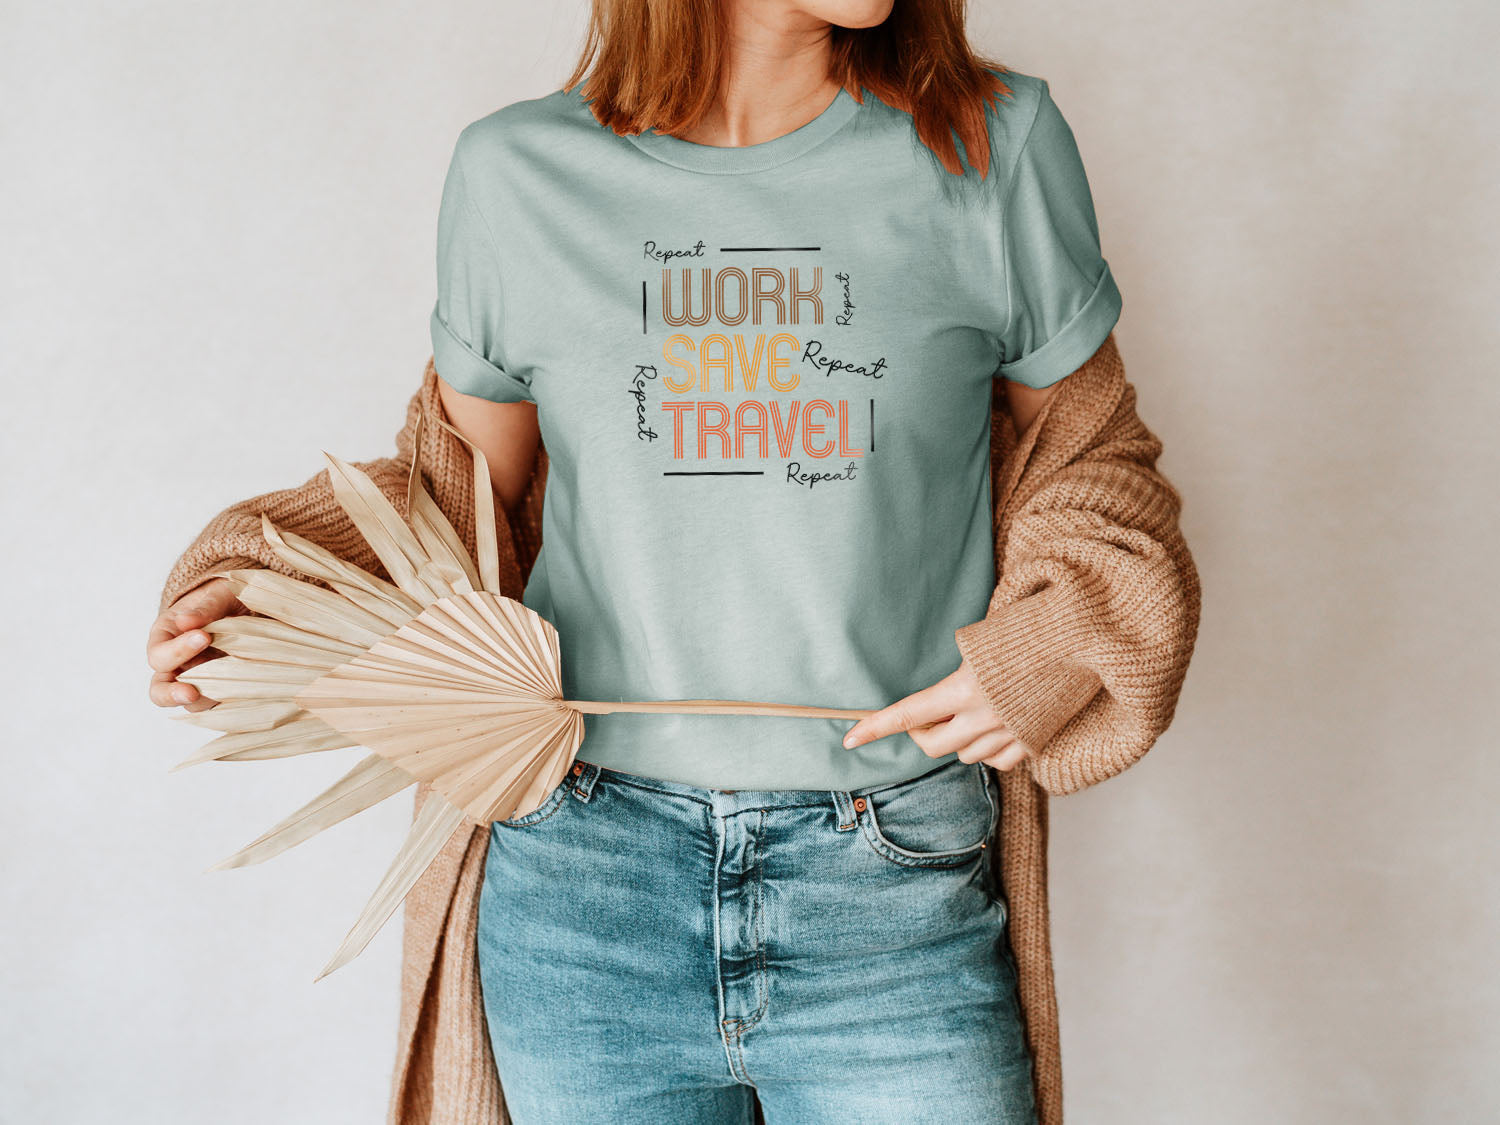 Work Save Travel Repeat T-shirt - Fun Work Motivation Inspiring Design Printed Tee Shirt